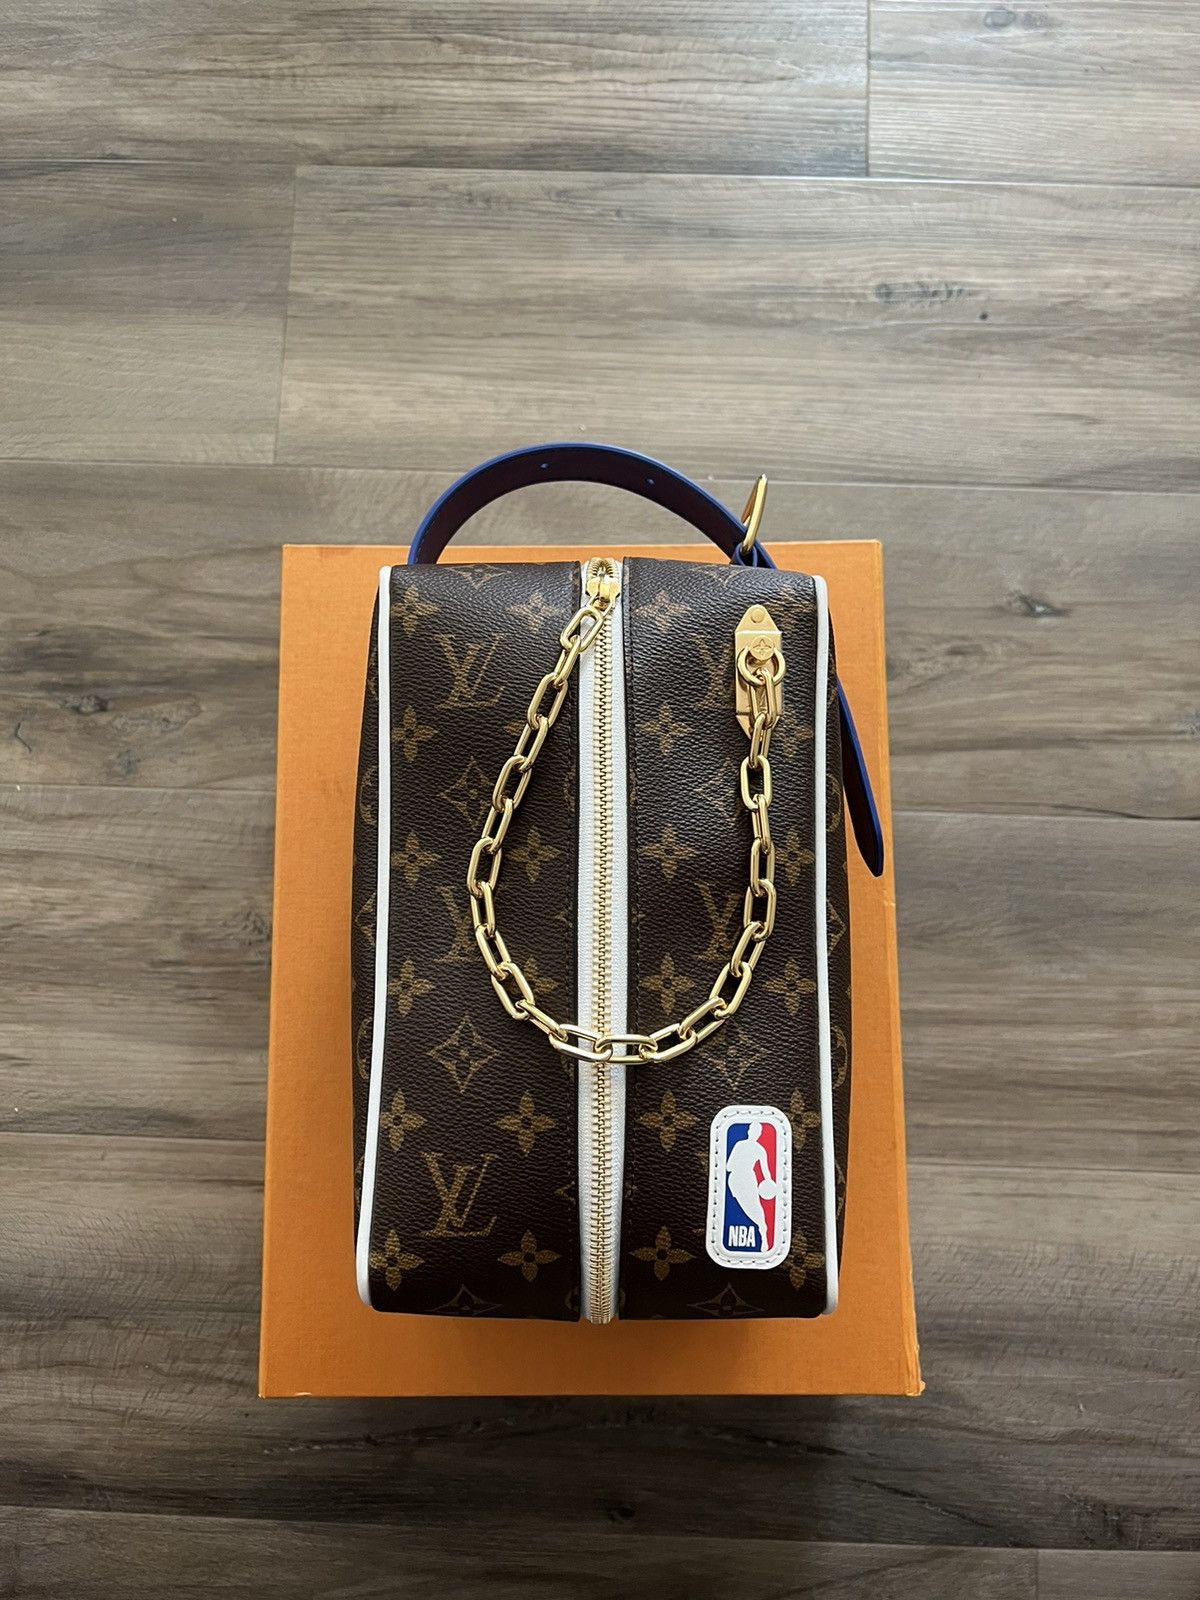 Louis Vuitton x NBA Legacy Shoes Box Backpack Monogram Brown